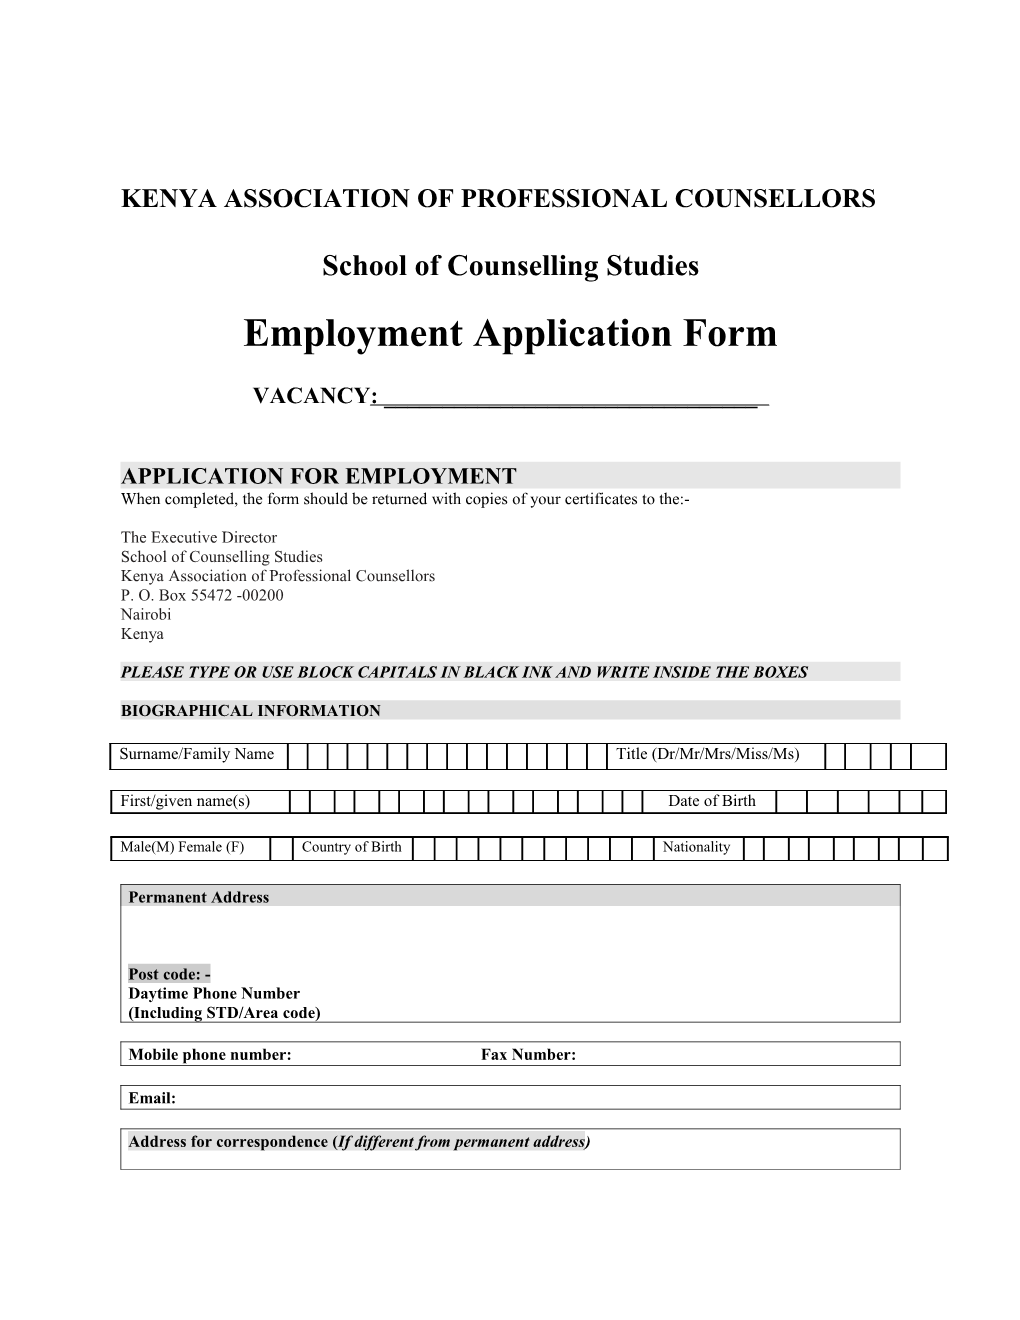 Kenya Association of Professional Counsellors